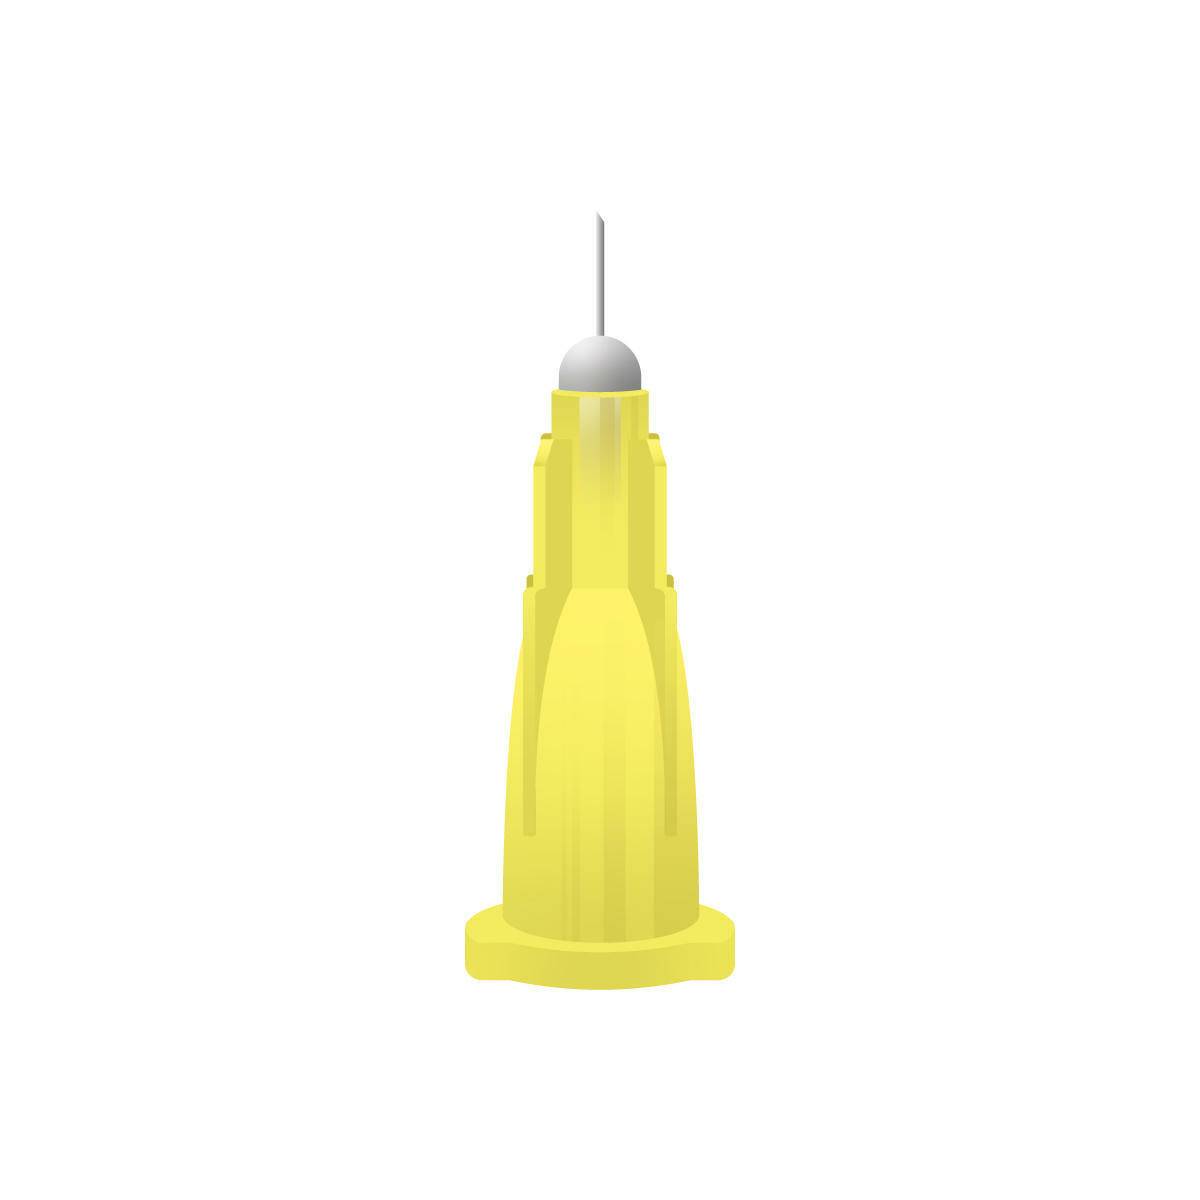 30g Yellow 4mm Meso-relle Mesotherapy Needle - UKMEDI